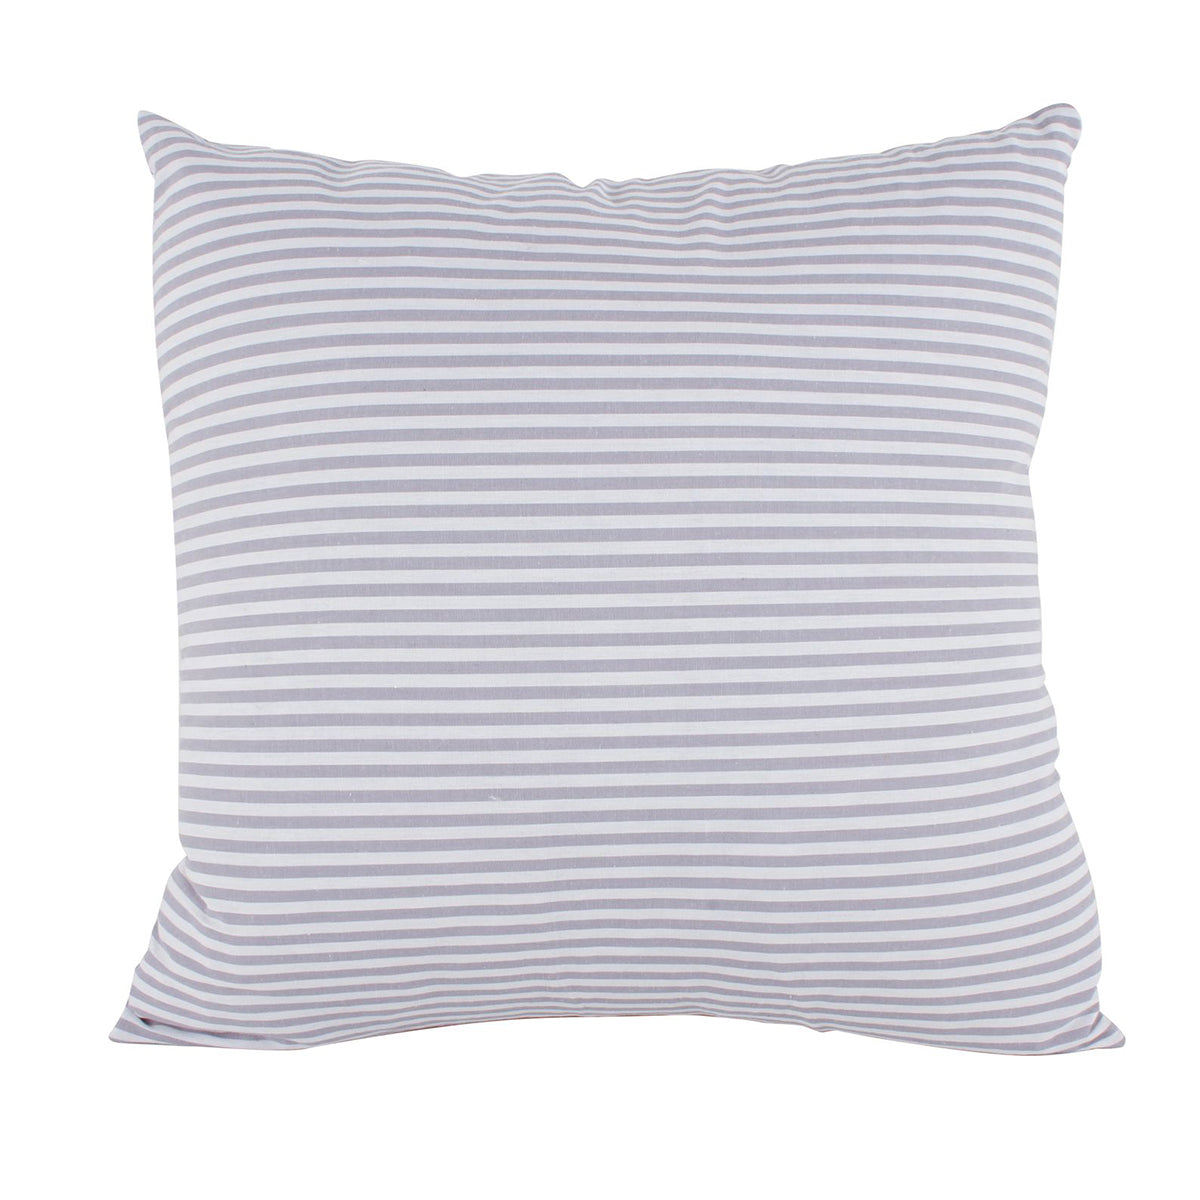 Cael Cotton Candy Stripe Filled Cushion 40 x 40cm